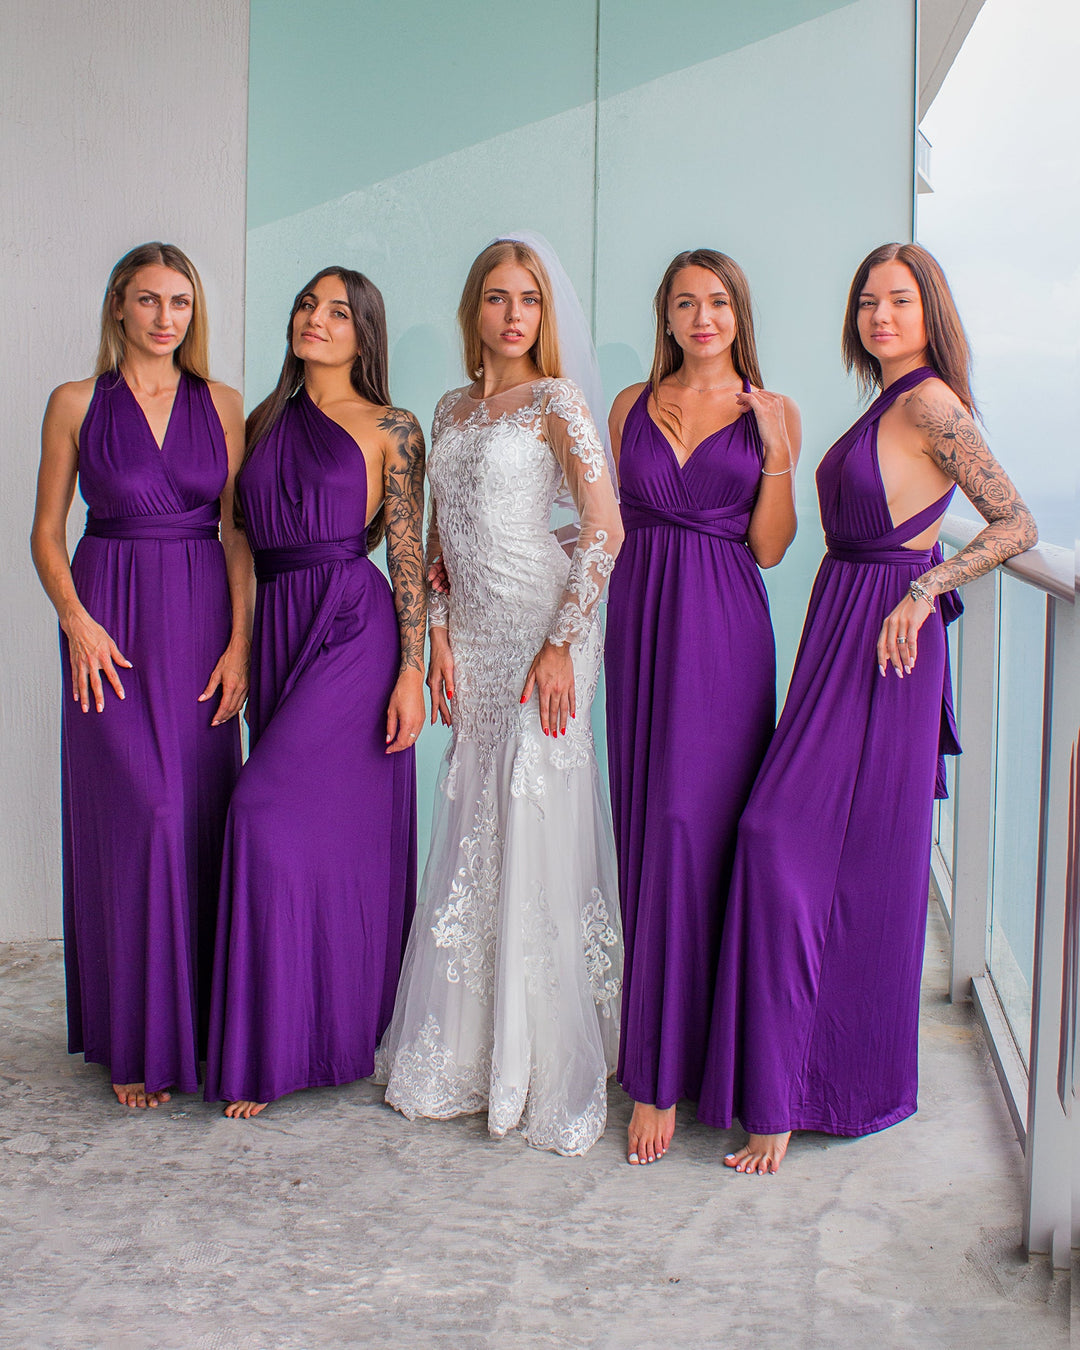 Convertible Elegant Purple Evening Dress Bridesmaid Dress (07154706) -  eDressit  Infinity dress bridesmaid, Blue bridesmaid dresses, Wedding  bridesmaids dresses blue